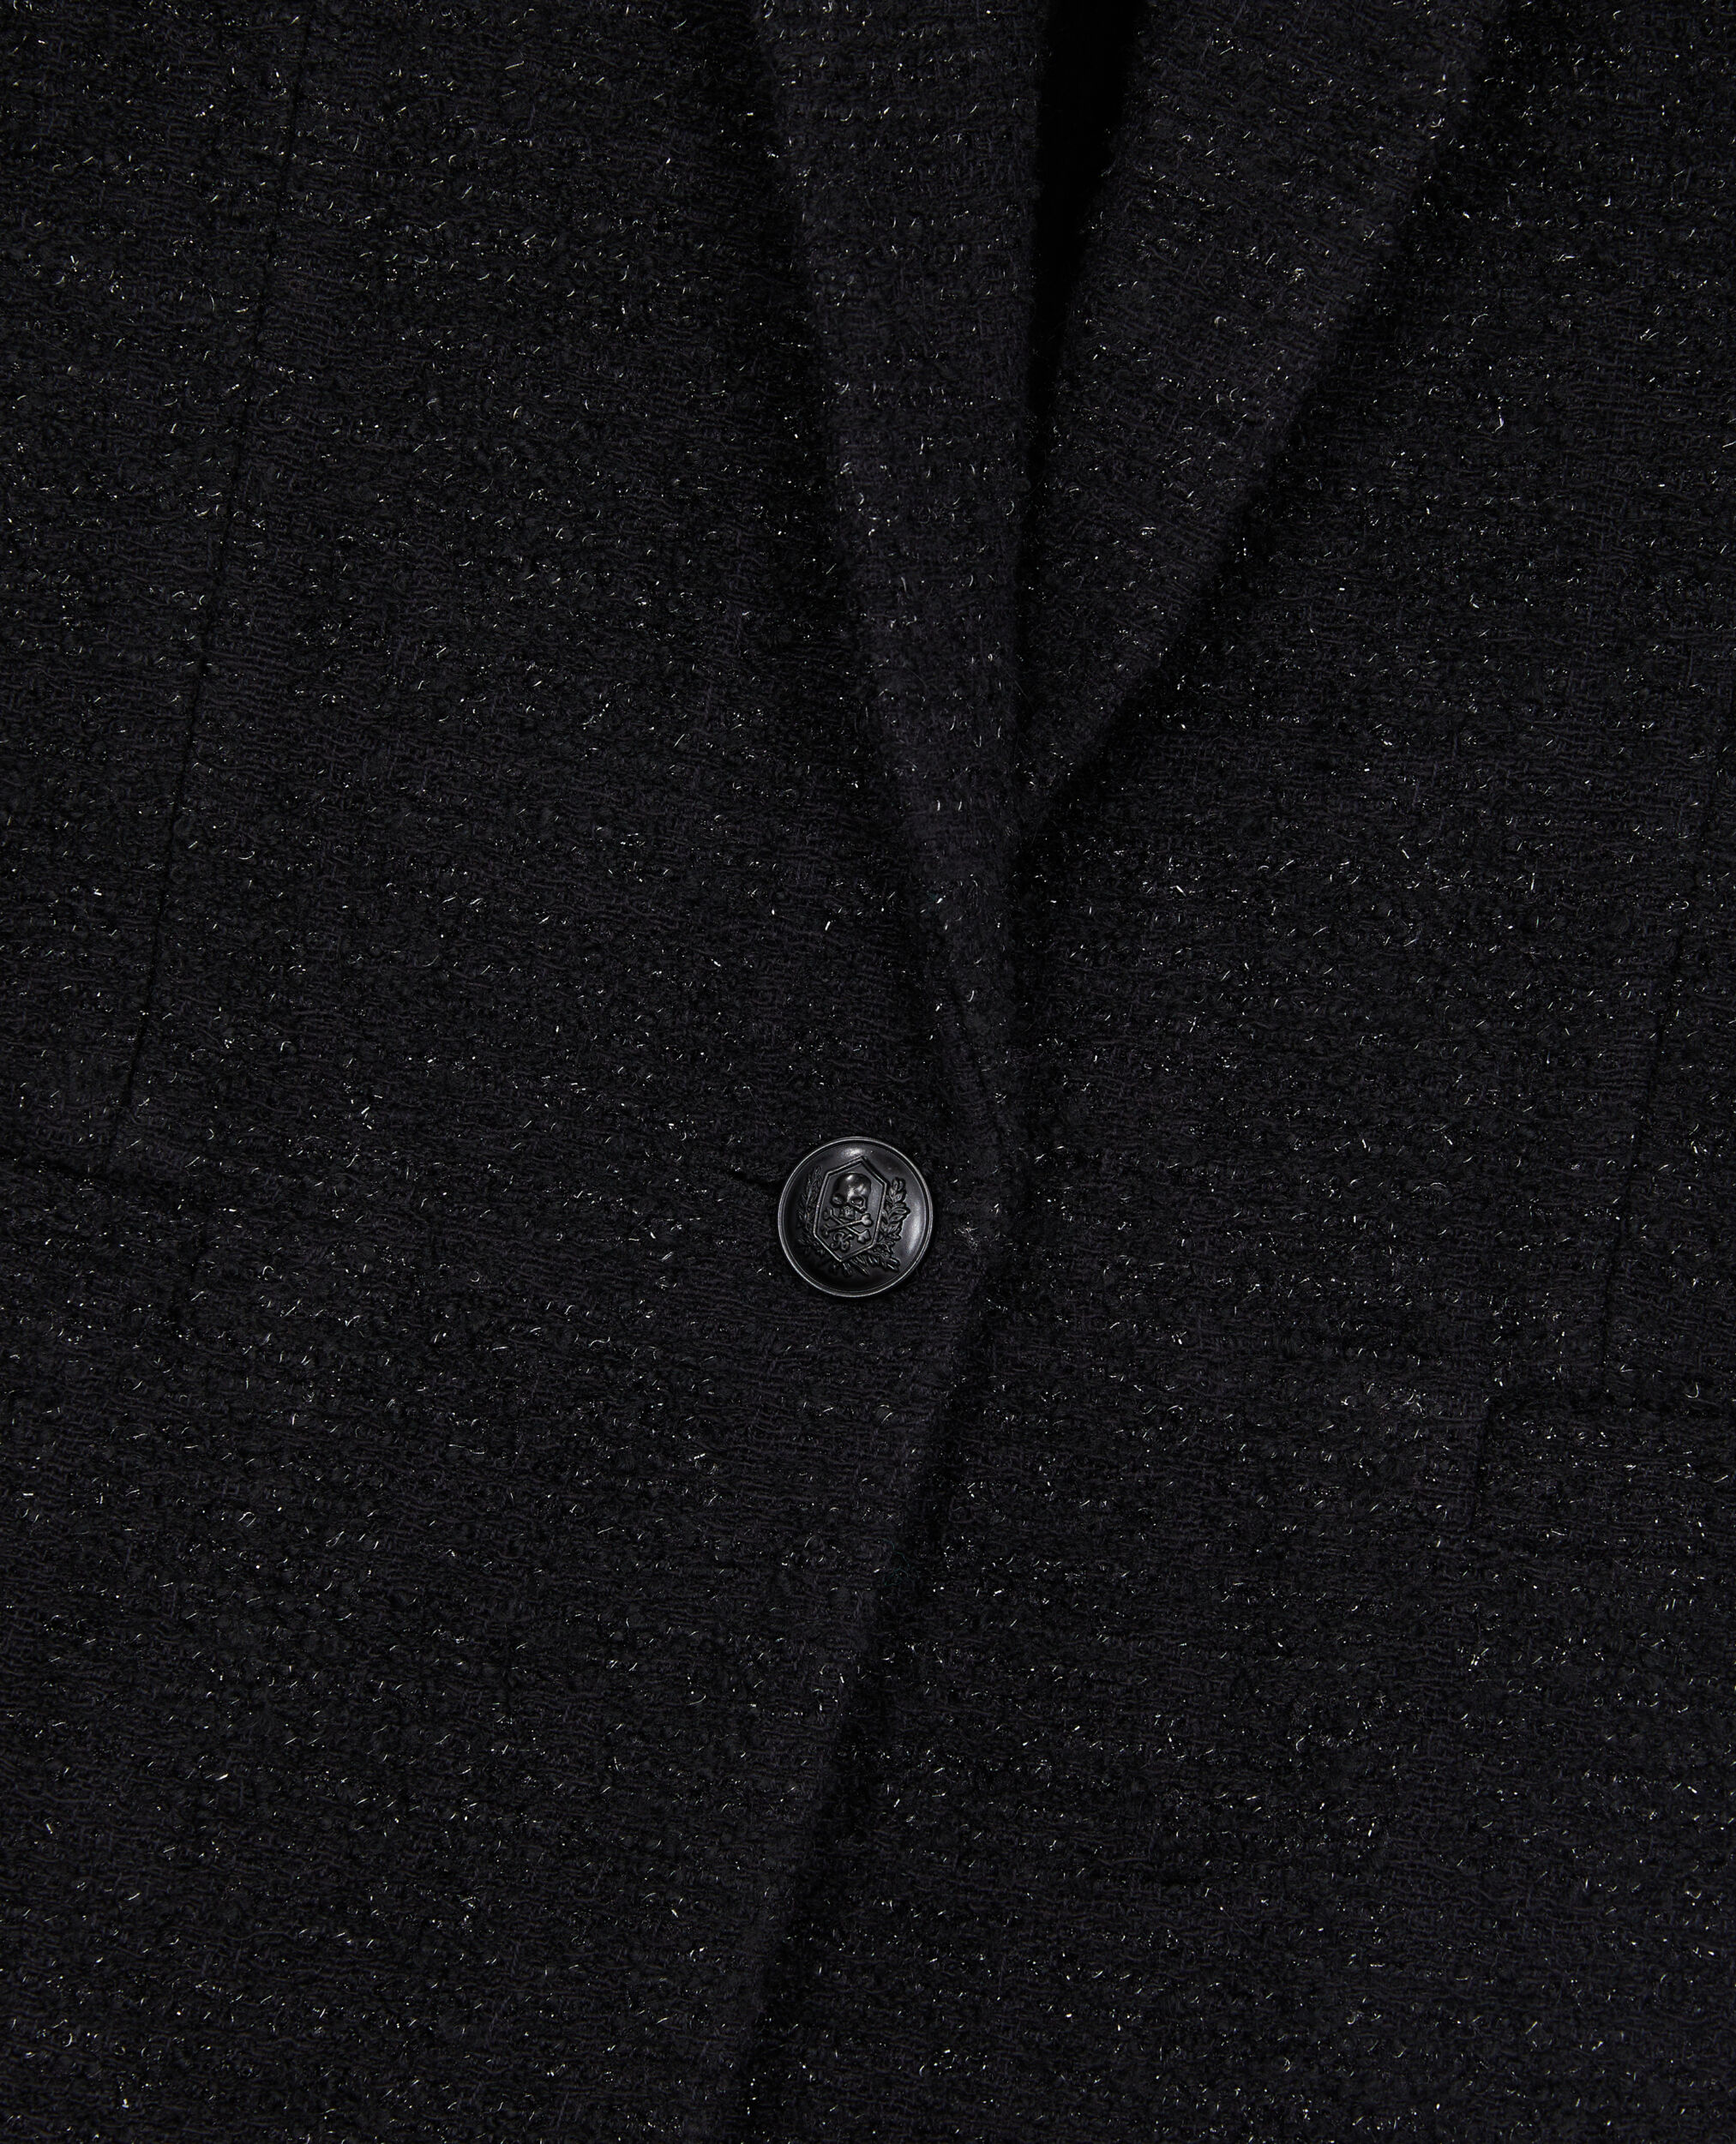 Black tweed blazer with silver details, BLACK, hi-res image number null